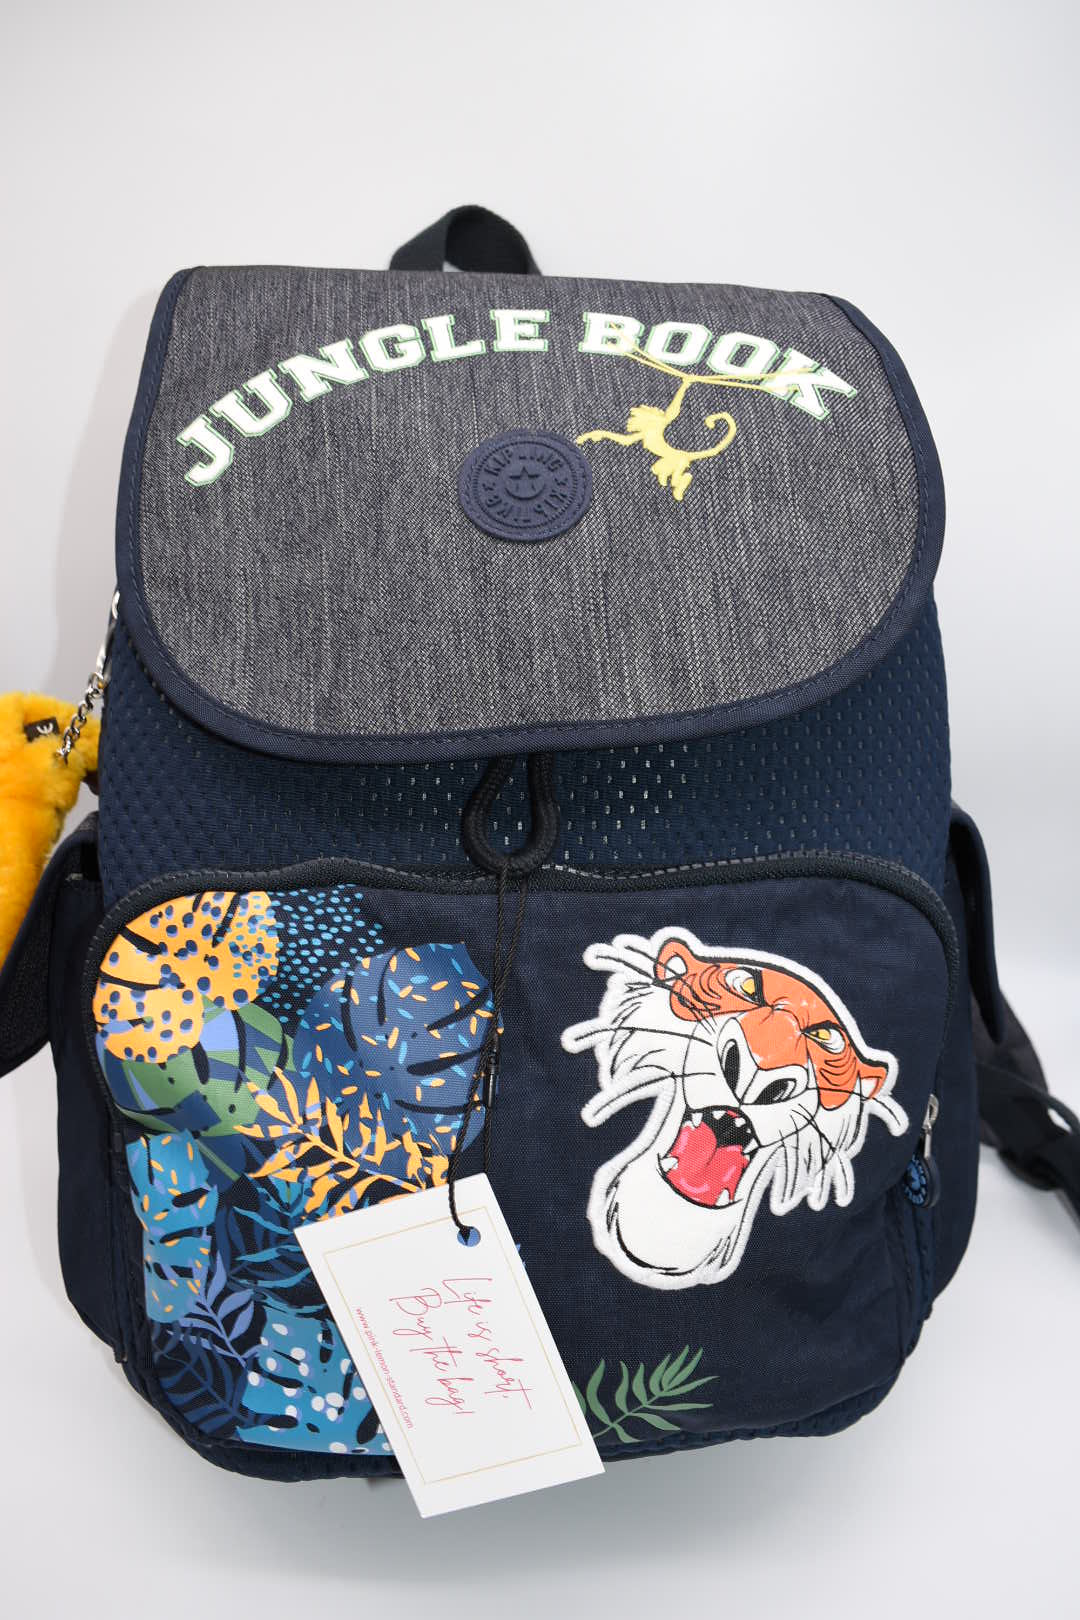 Kipling Jungle Book City Pack Medium Backpack